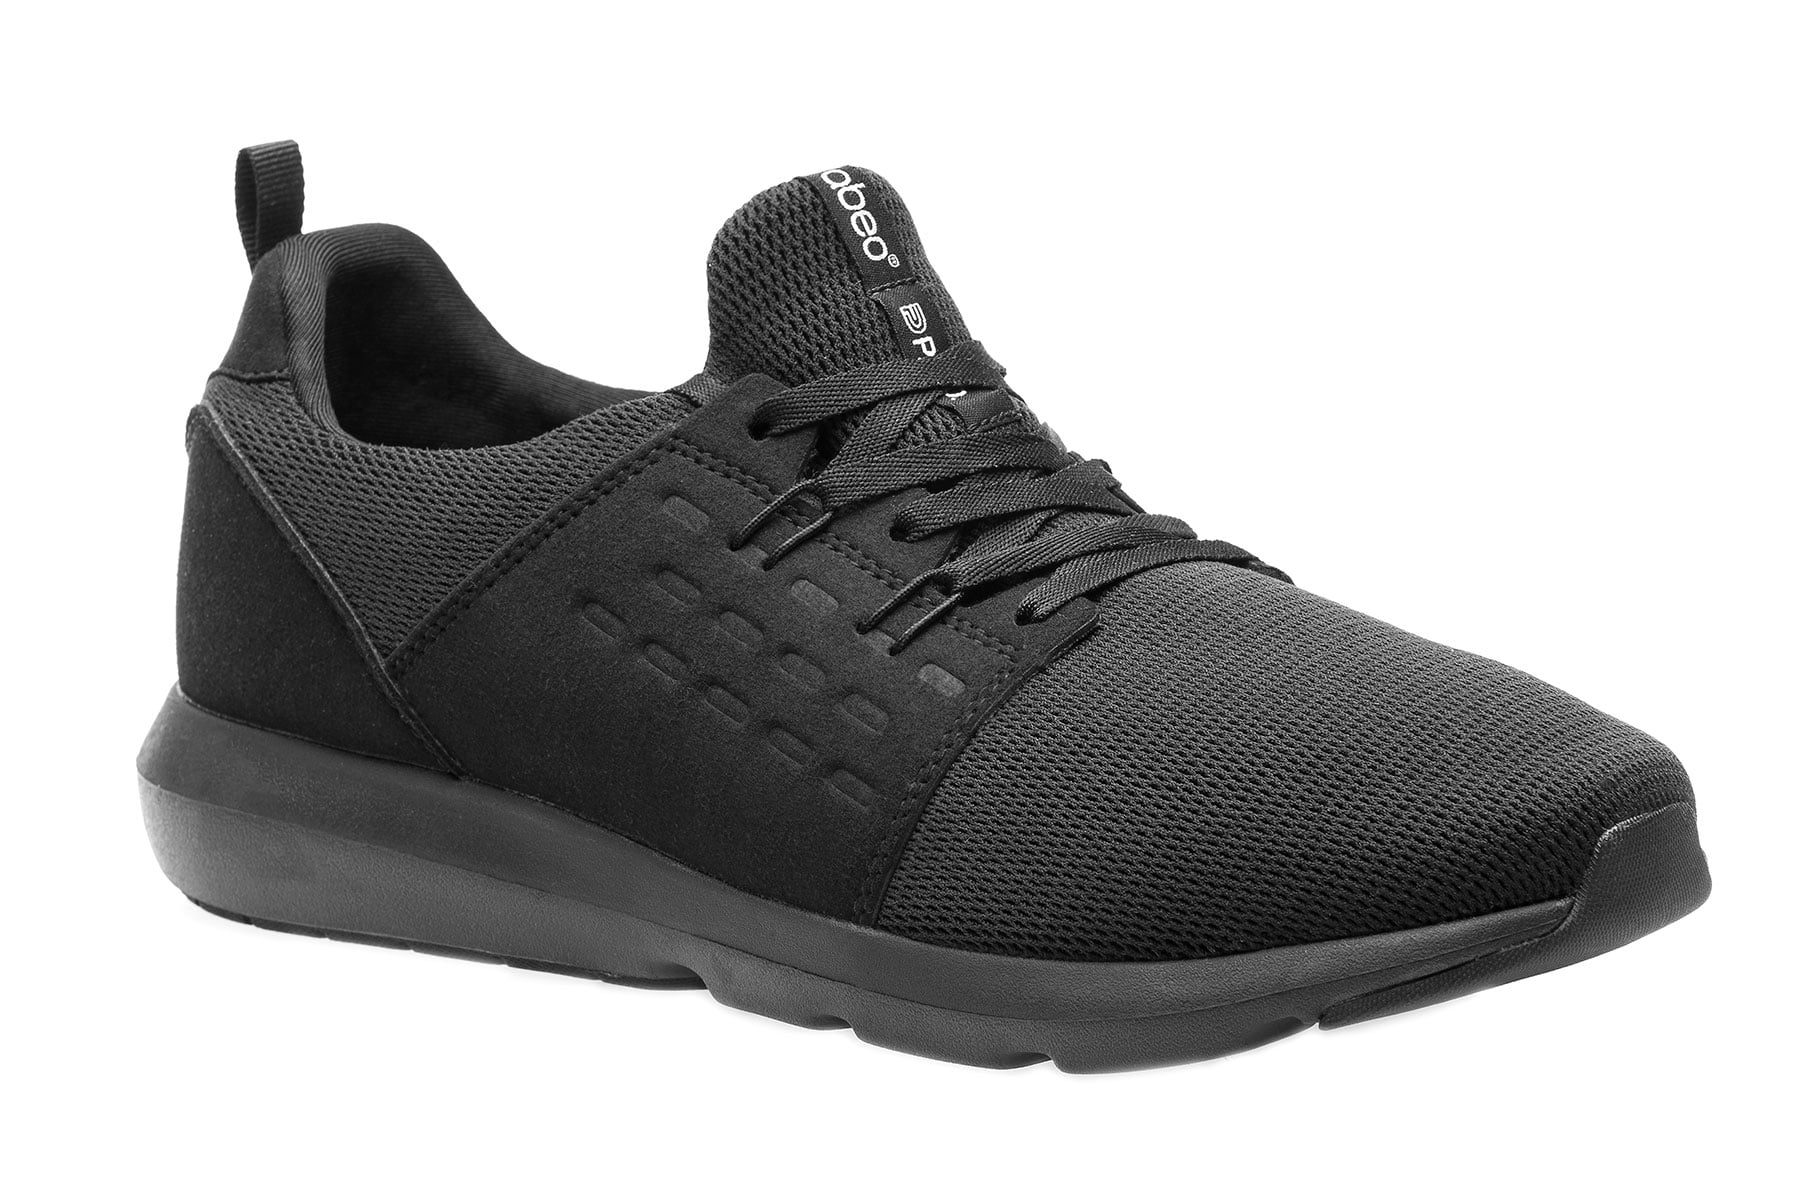 ABEO Footwear - ABEO Men's Everett - Athletic Shoes - Walmart.com ...